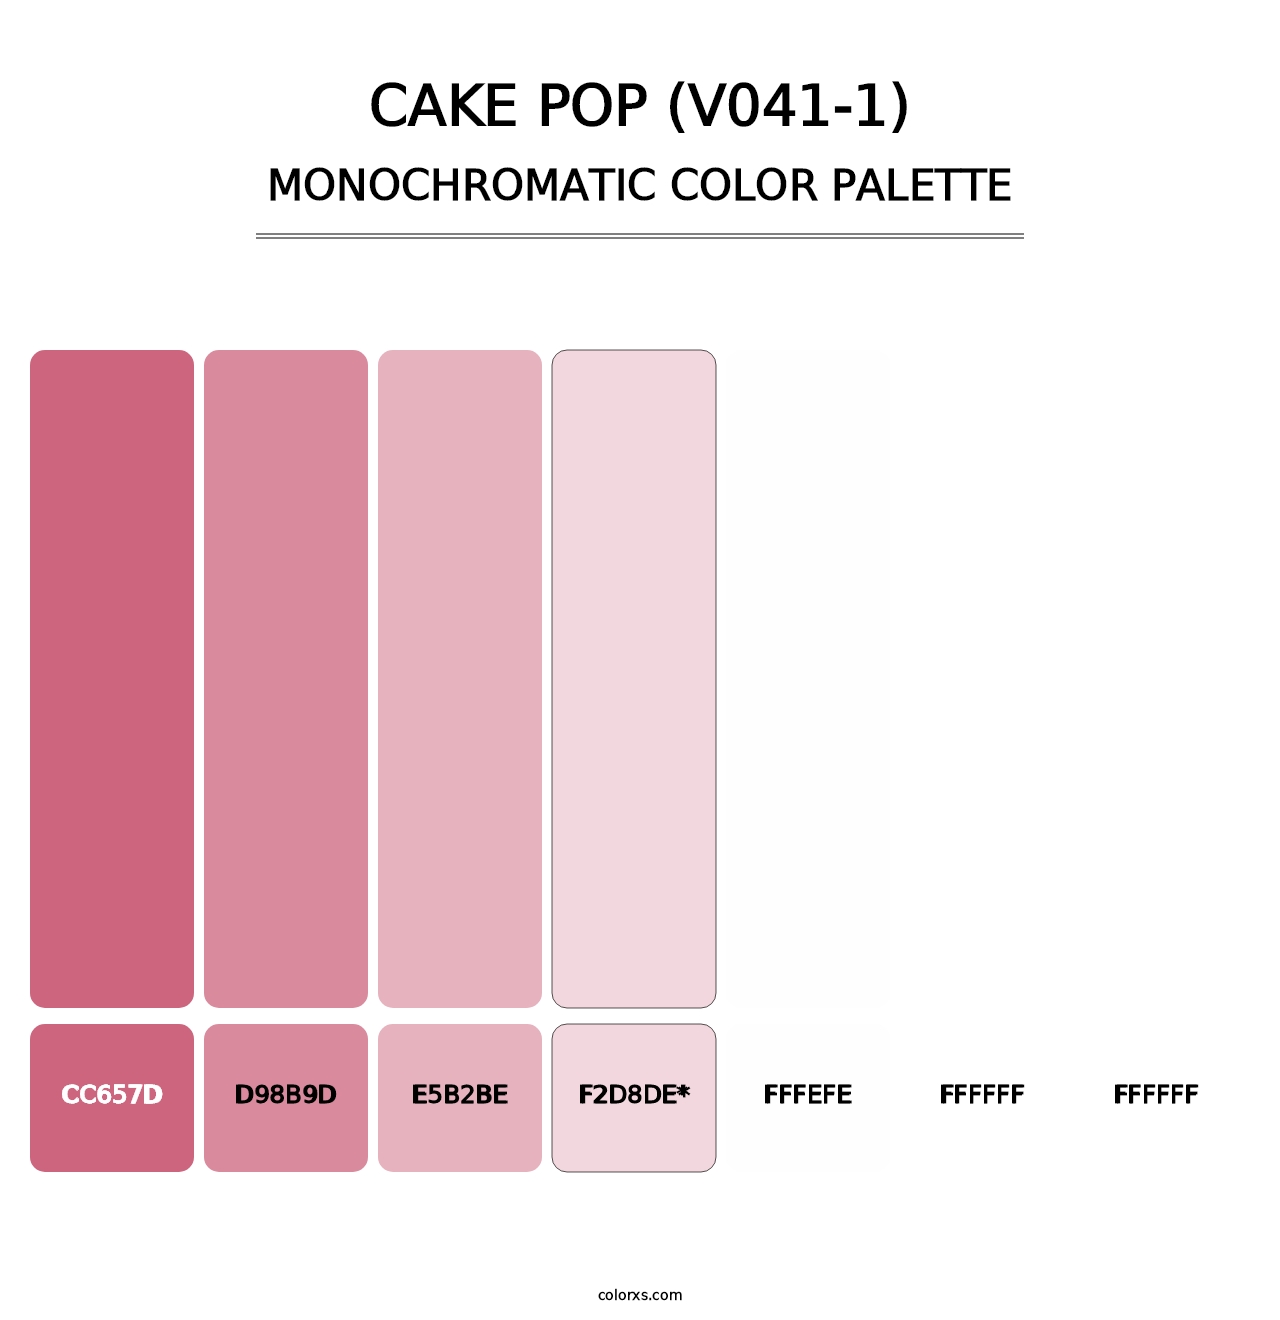 Cake Pop (V041-1) - Monochromatic Color Palette